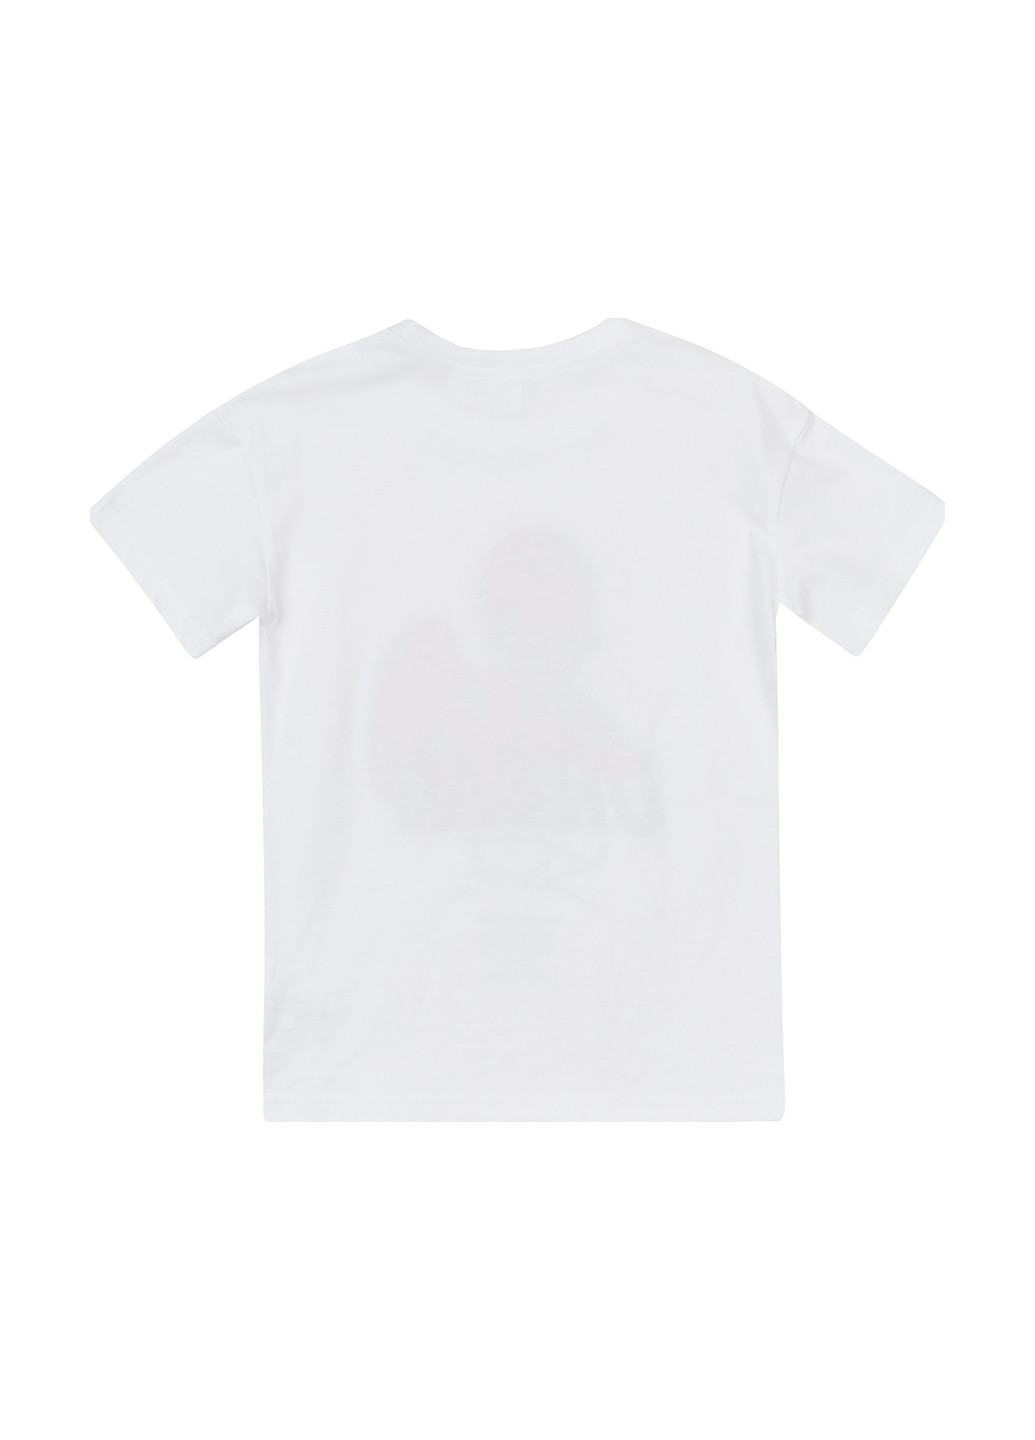 Белая летняя футболка O! clothing